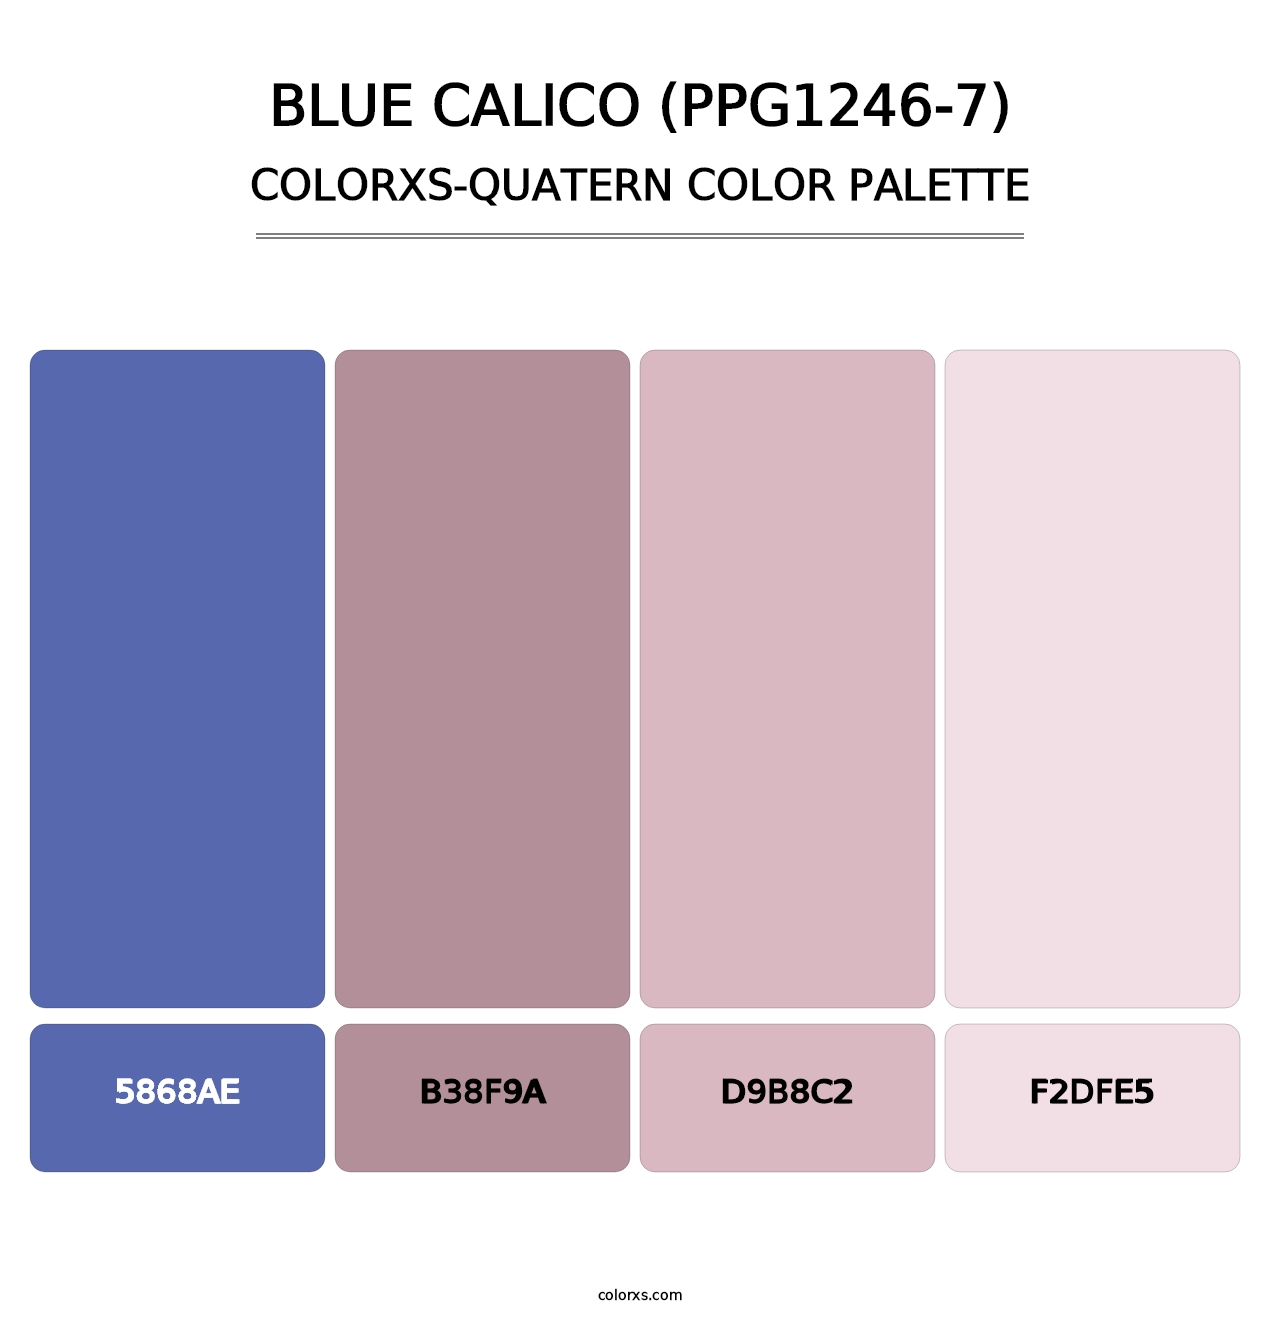 Blue Calico (PPG1246-7) - Colorxs Quatern Palette